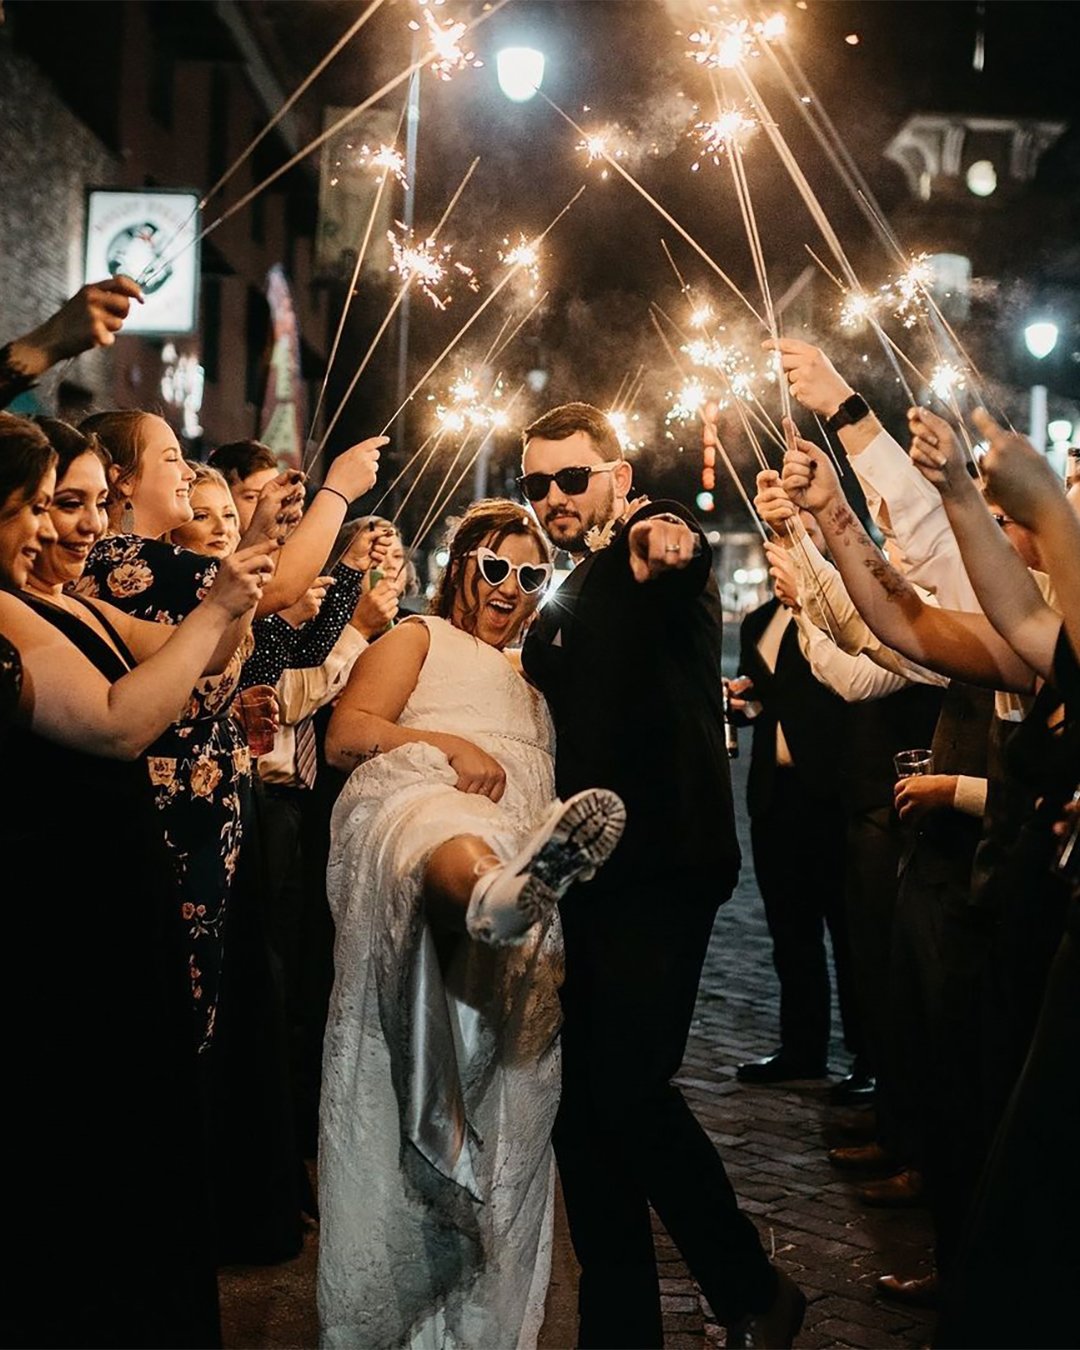 sparkler photo ideas tips bride groom in sunglasses maktographymk